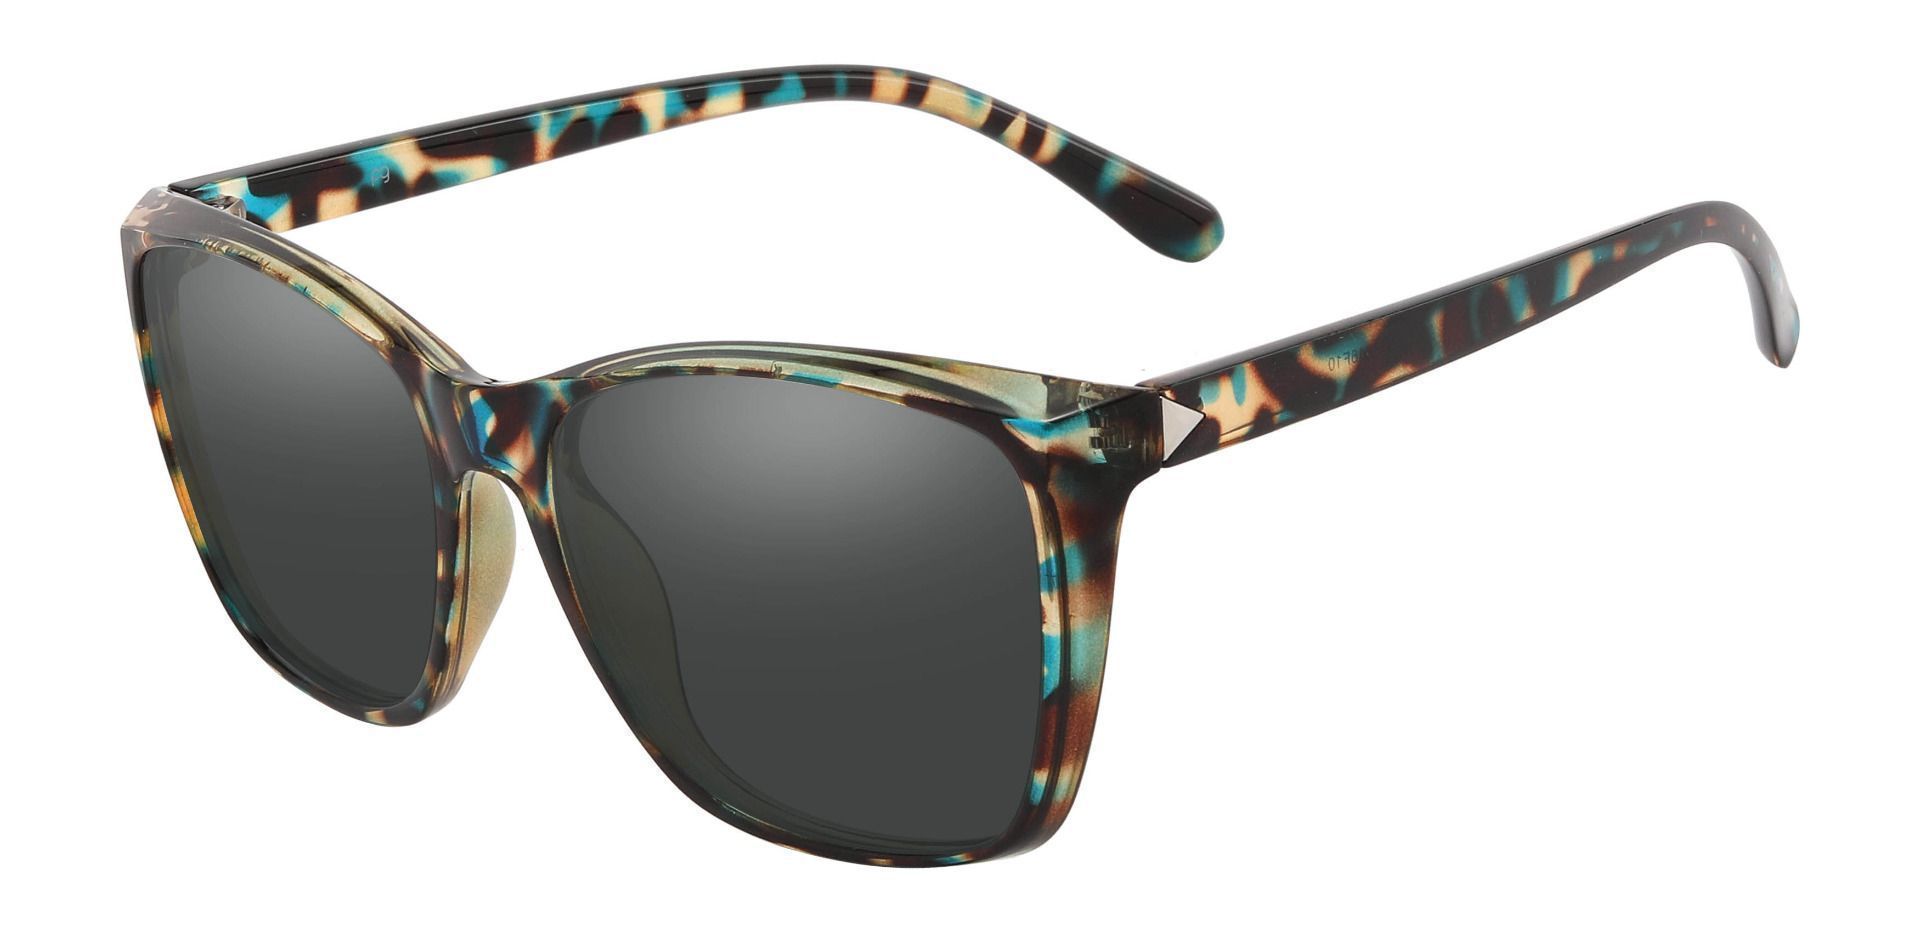 Taryn Square Prescription Sunglasses - Floral Frame With Gray Lenses